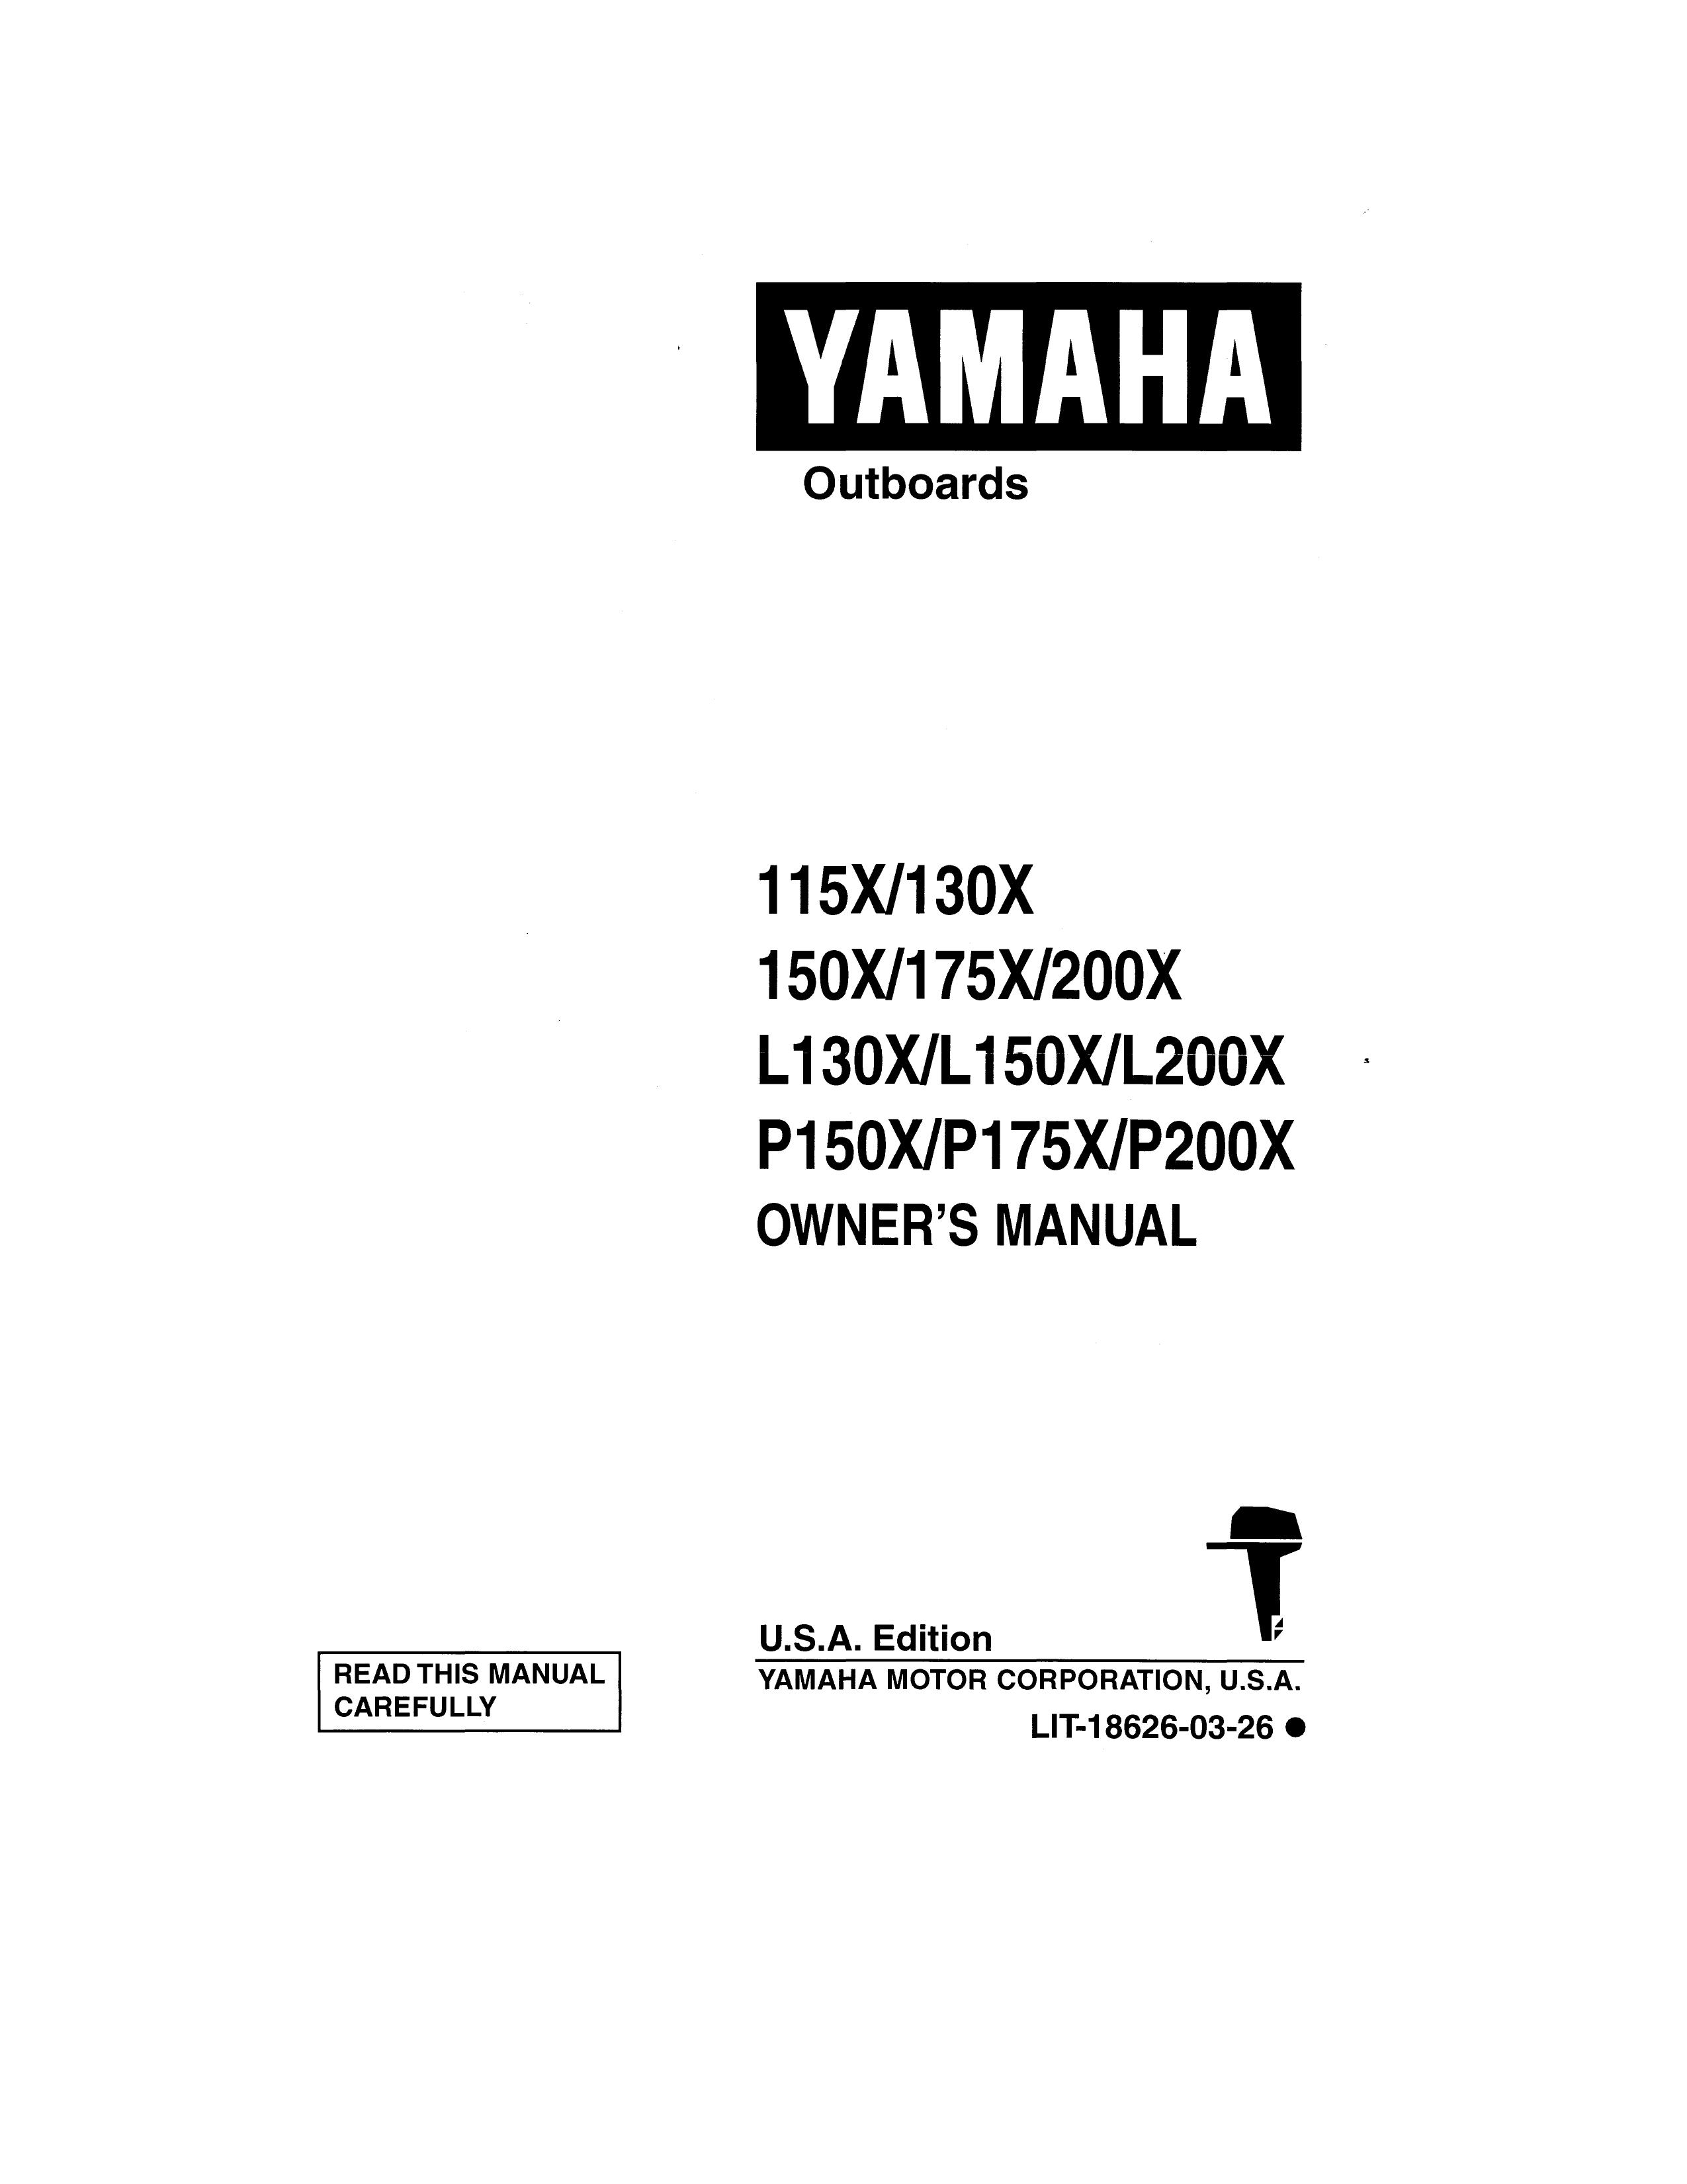 Yamaha 150X Outboard Motor User Manual